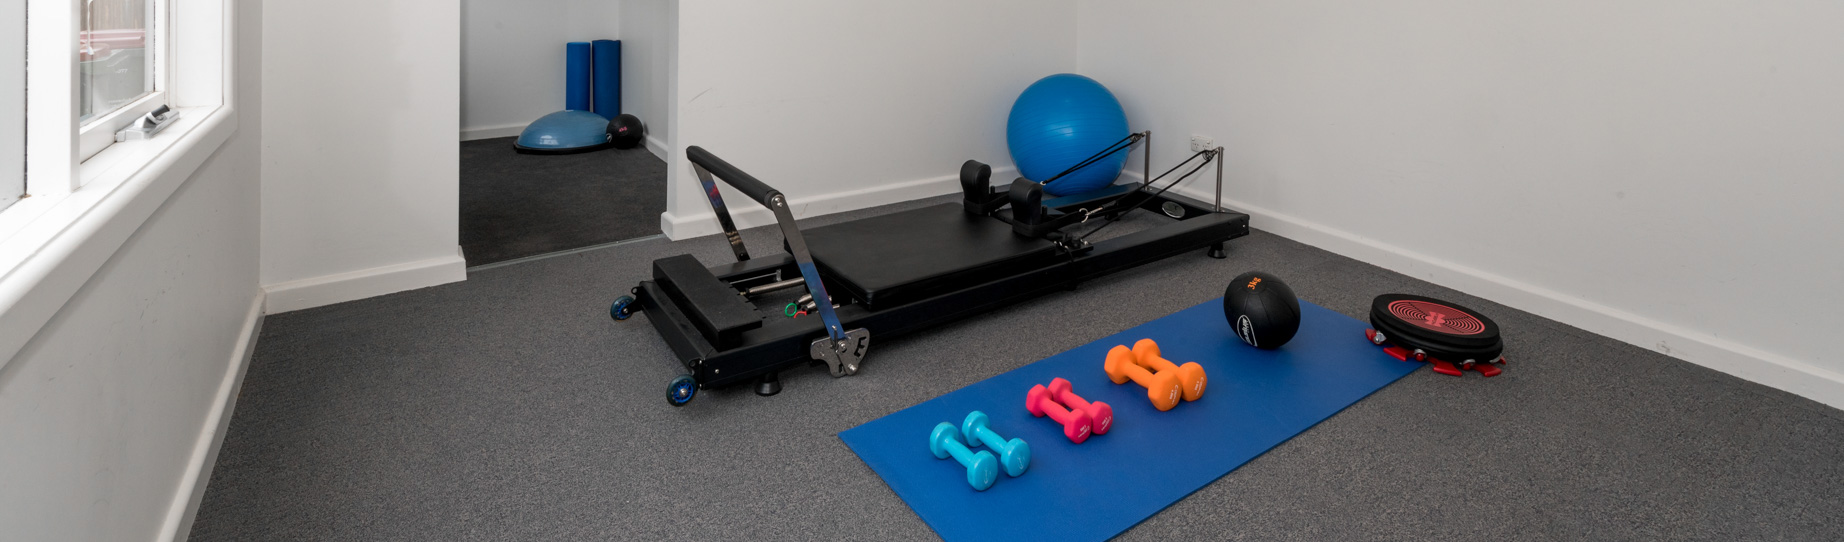 Reformer Pilates machine at Healing Hands Osteopath Croydon